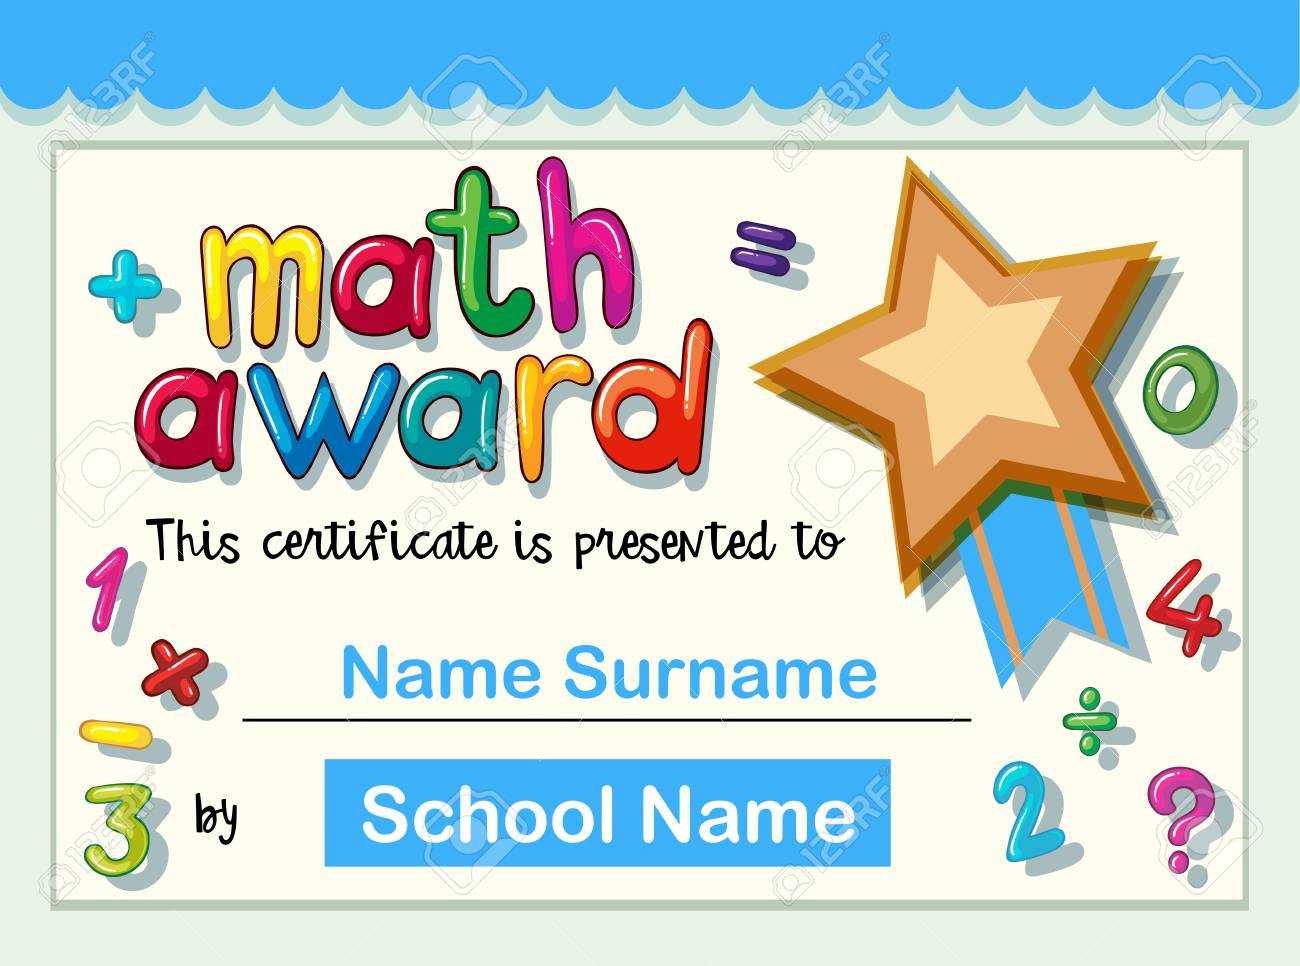 Certificate Template For Math Award With Golden Star Illustration Regarding Star Award Certificate Template